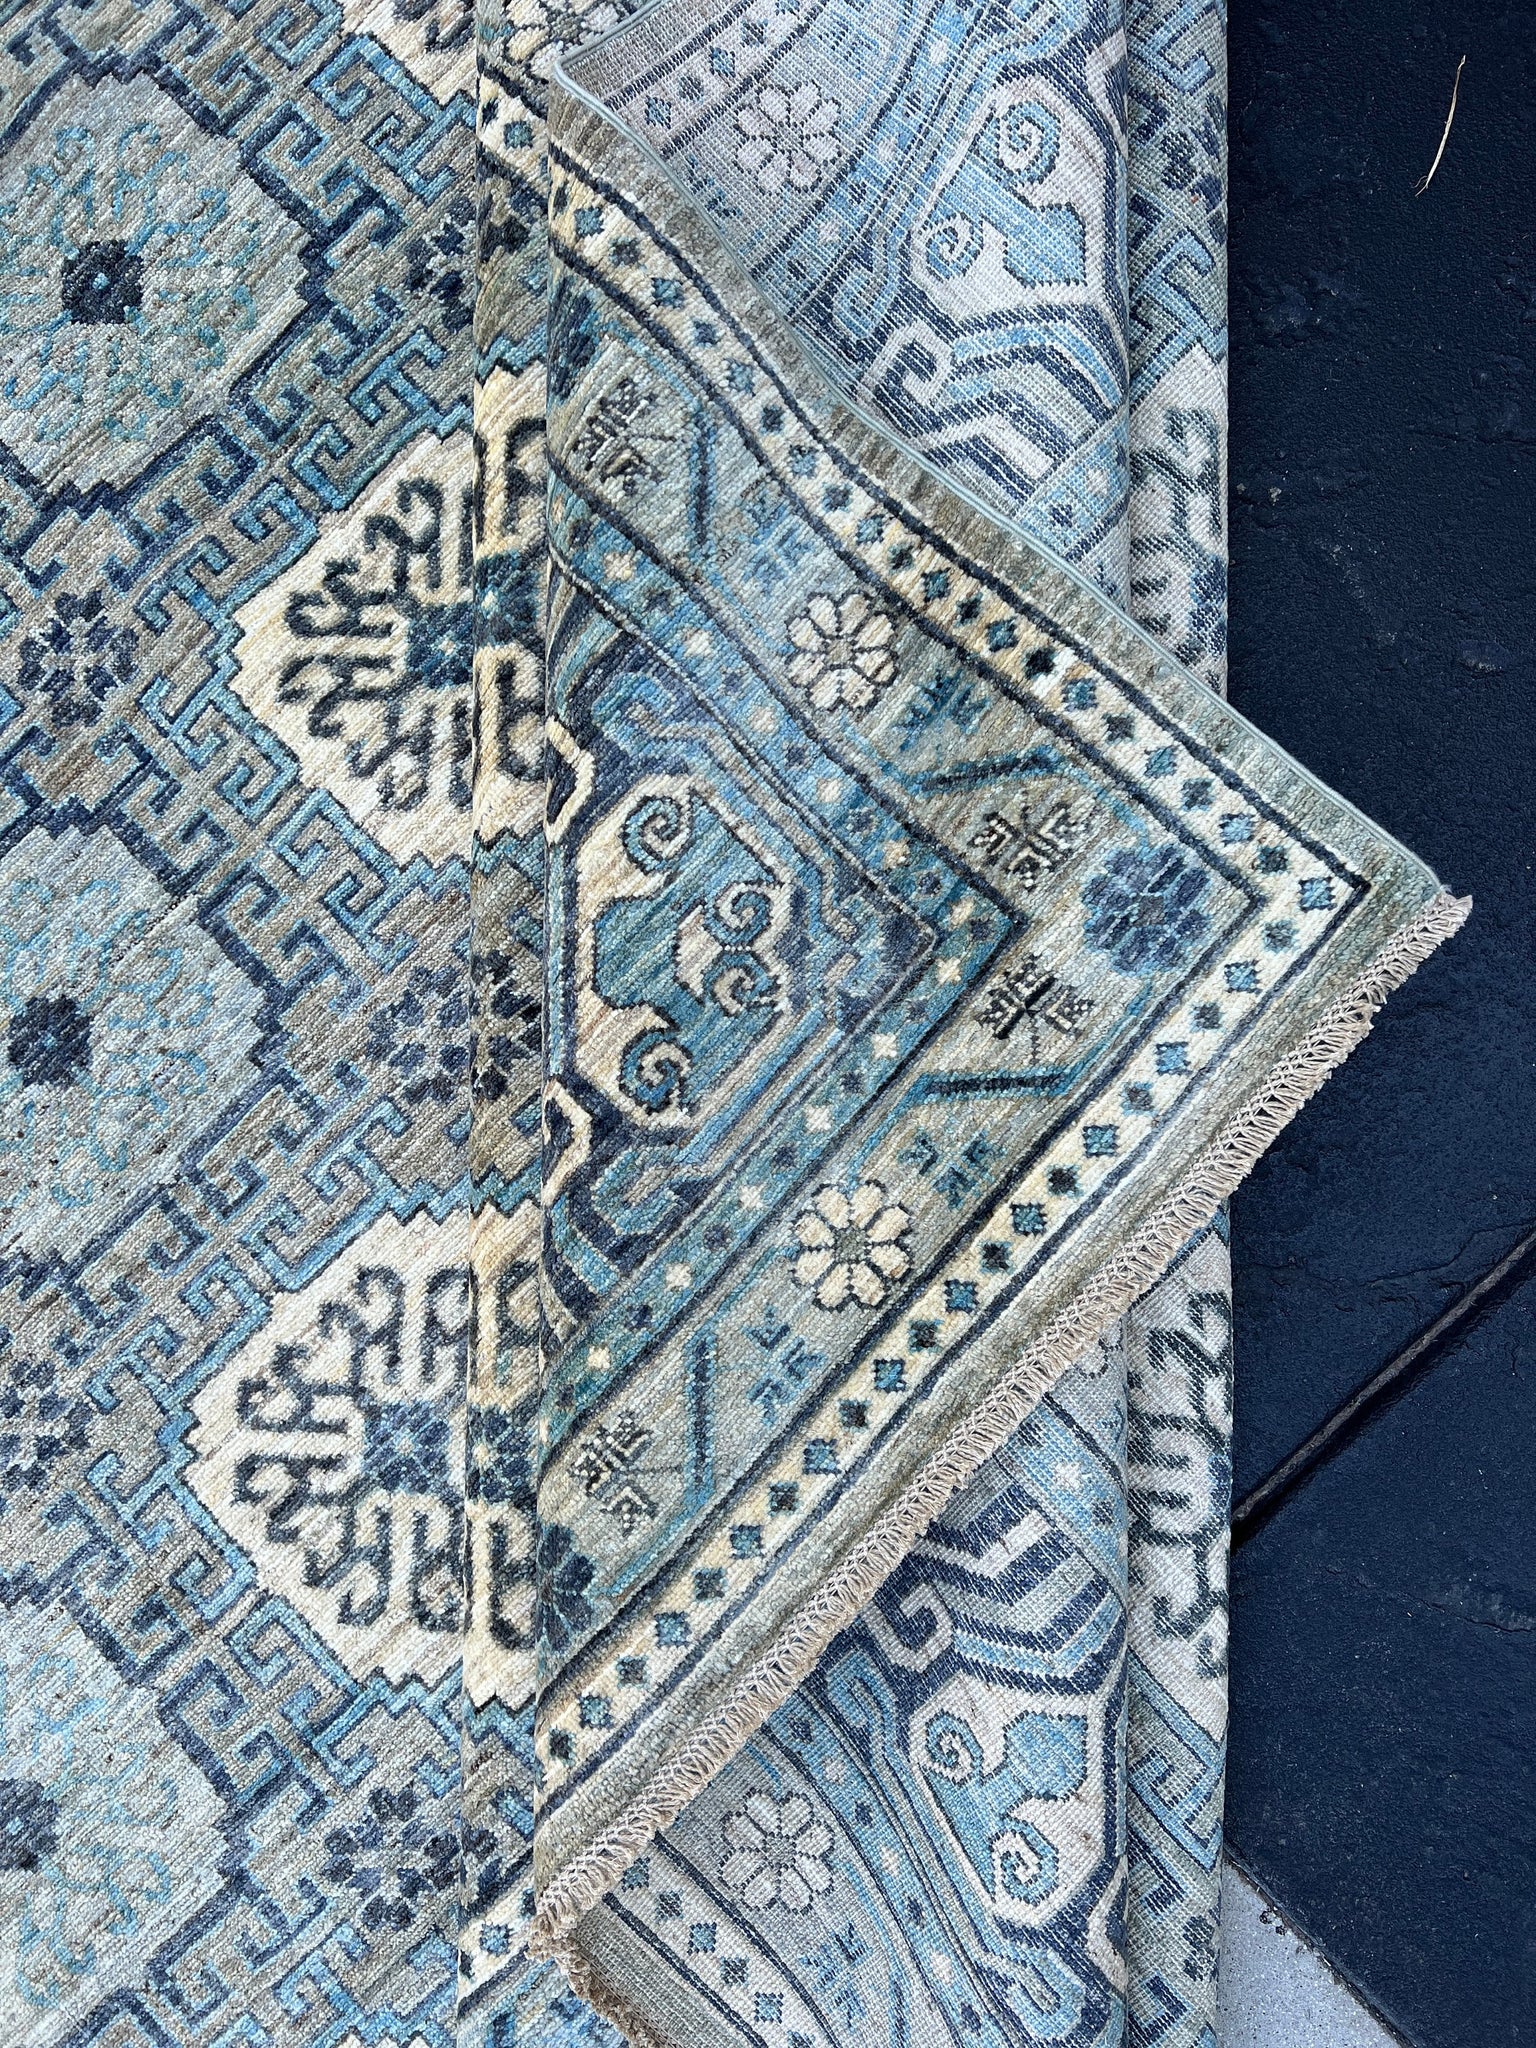 10x13 Handmade Afghan Rug | Green Grey Greige Navy Sky Blue Cream Ivory Charcoal Grey | Khotan Wool Oriental Knotted Luxury Turkish Persian